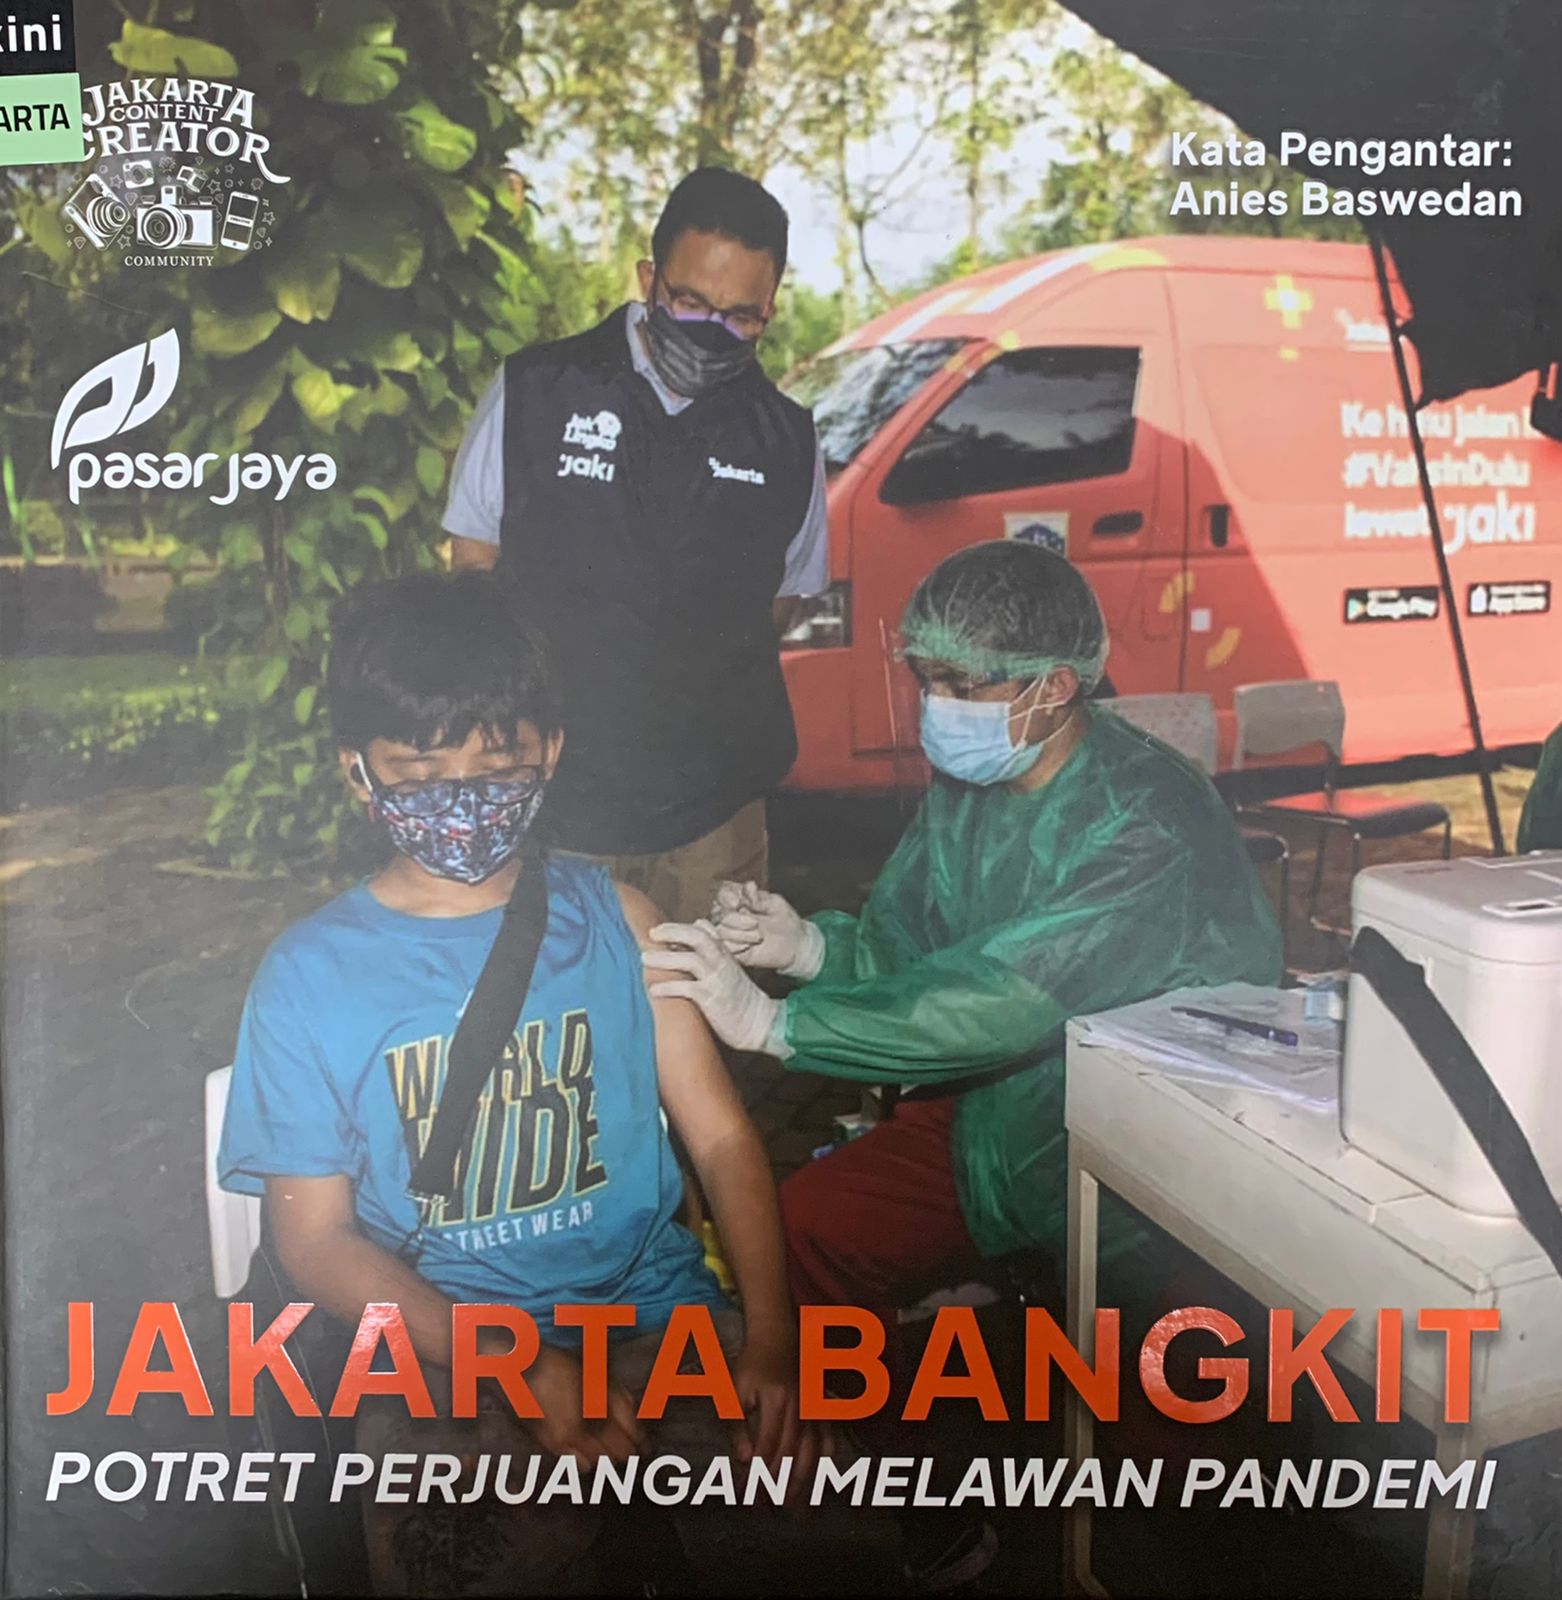 Jakarta bangkit :  potret perjuangan melawan pandemi